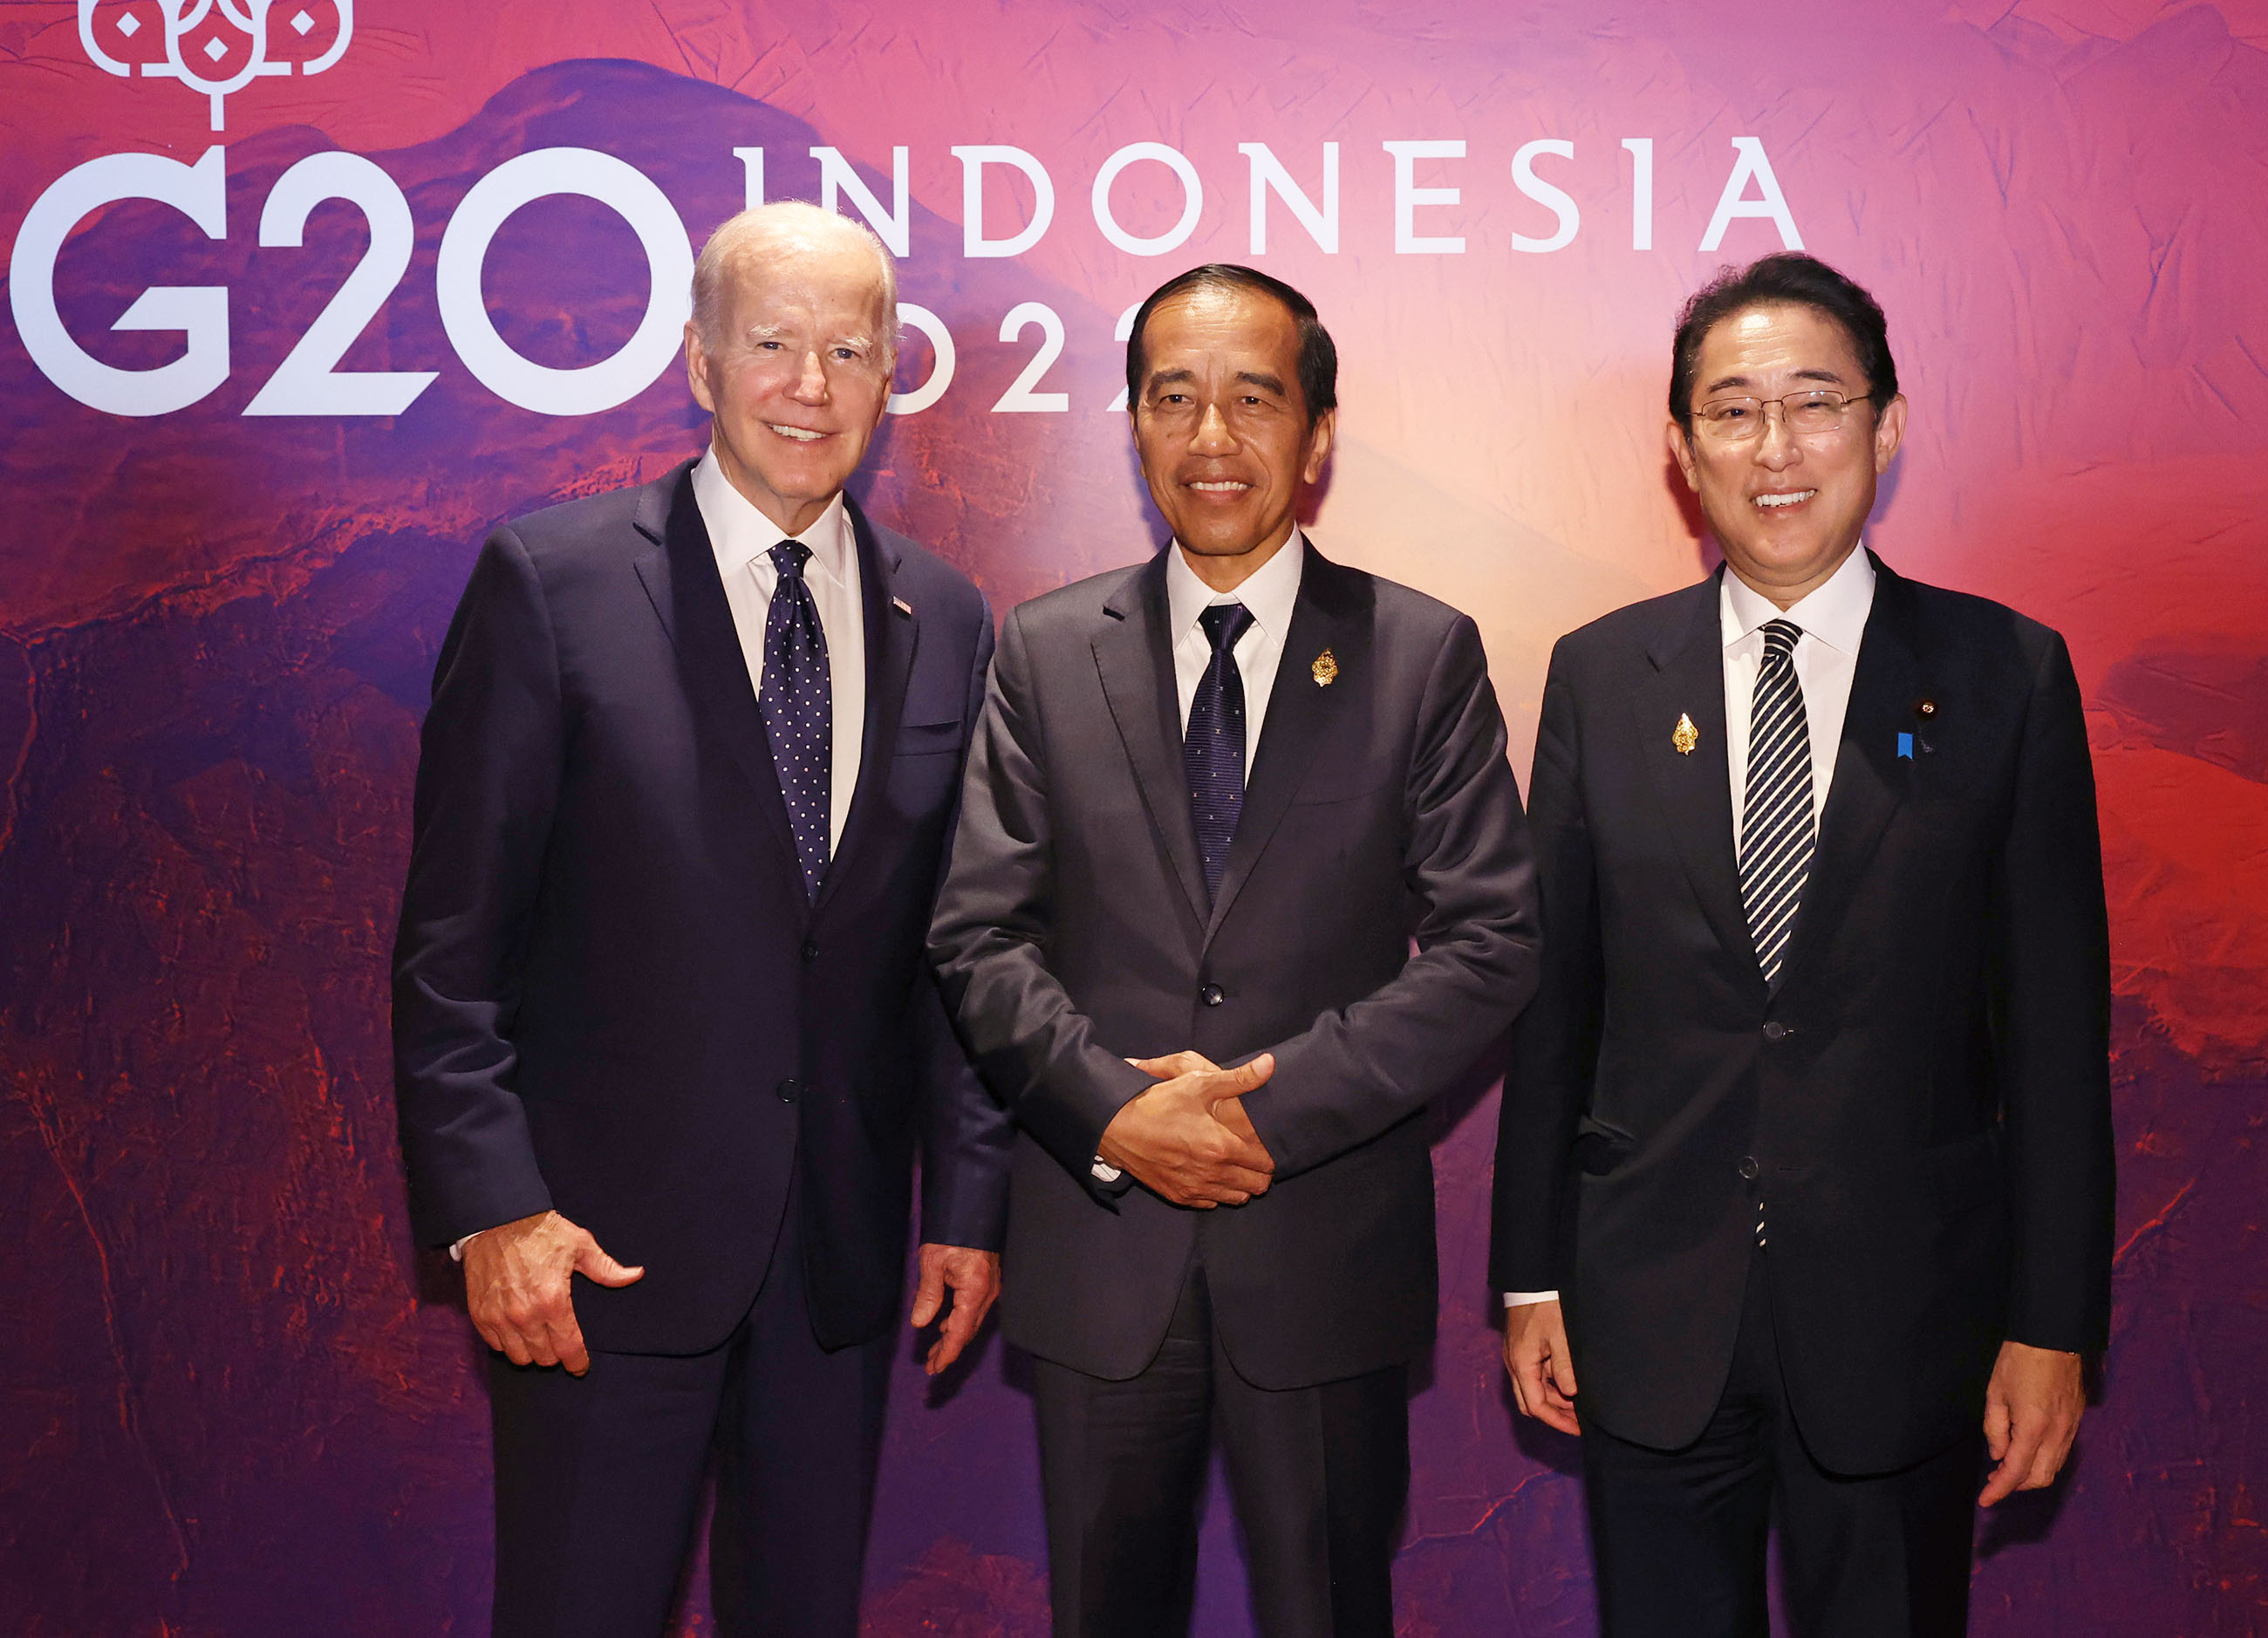 Photo session with President Joe Biden of the U.S. and President Joko Widodo of Indonesia